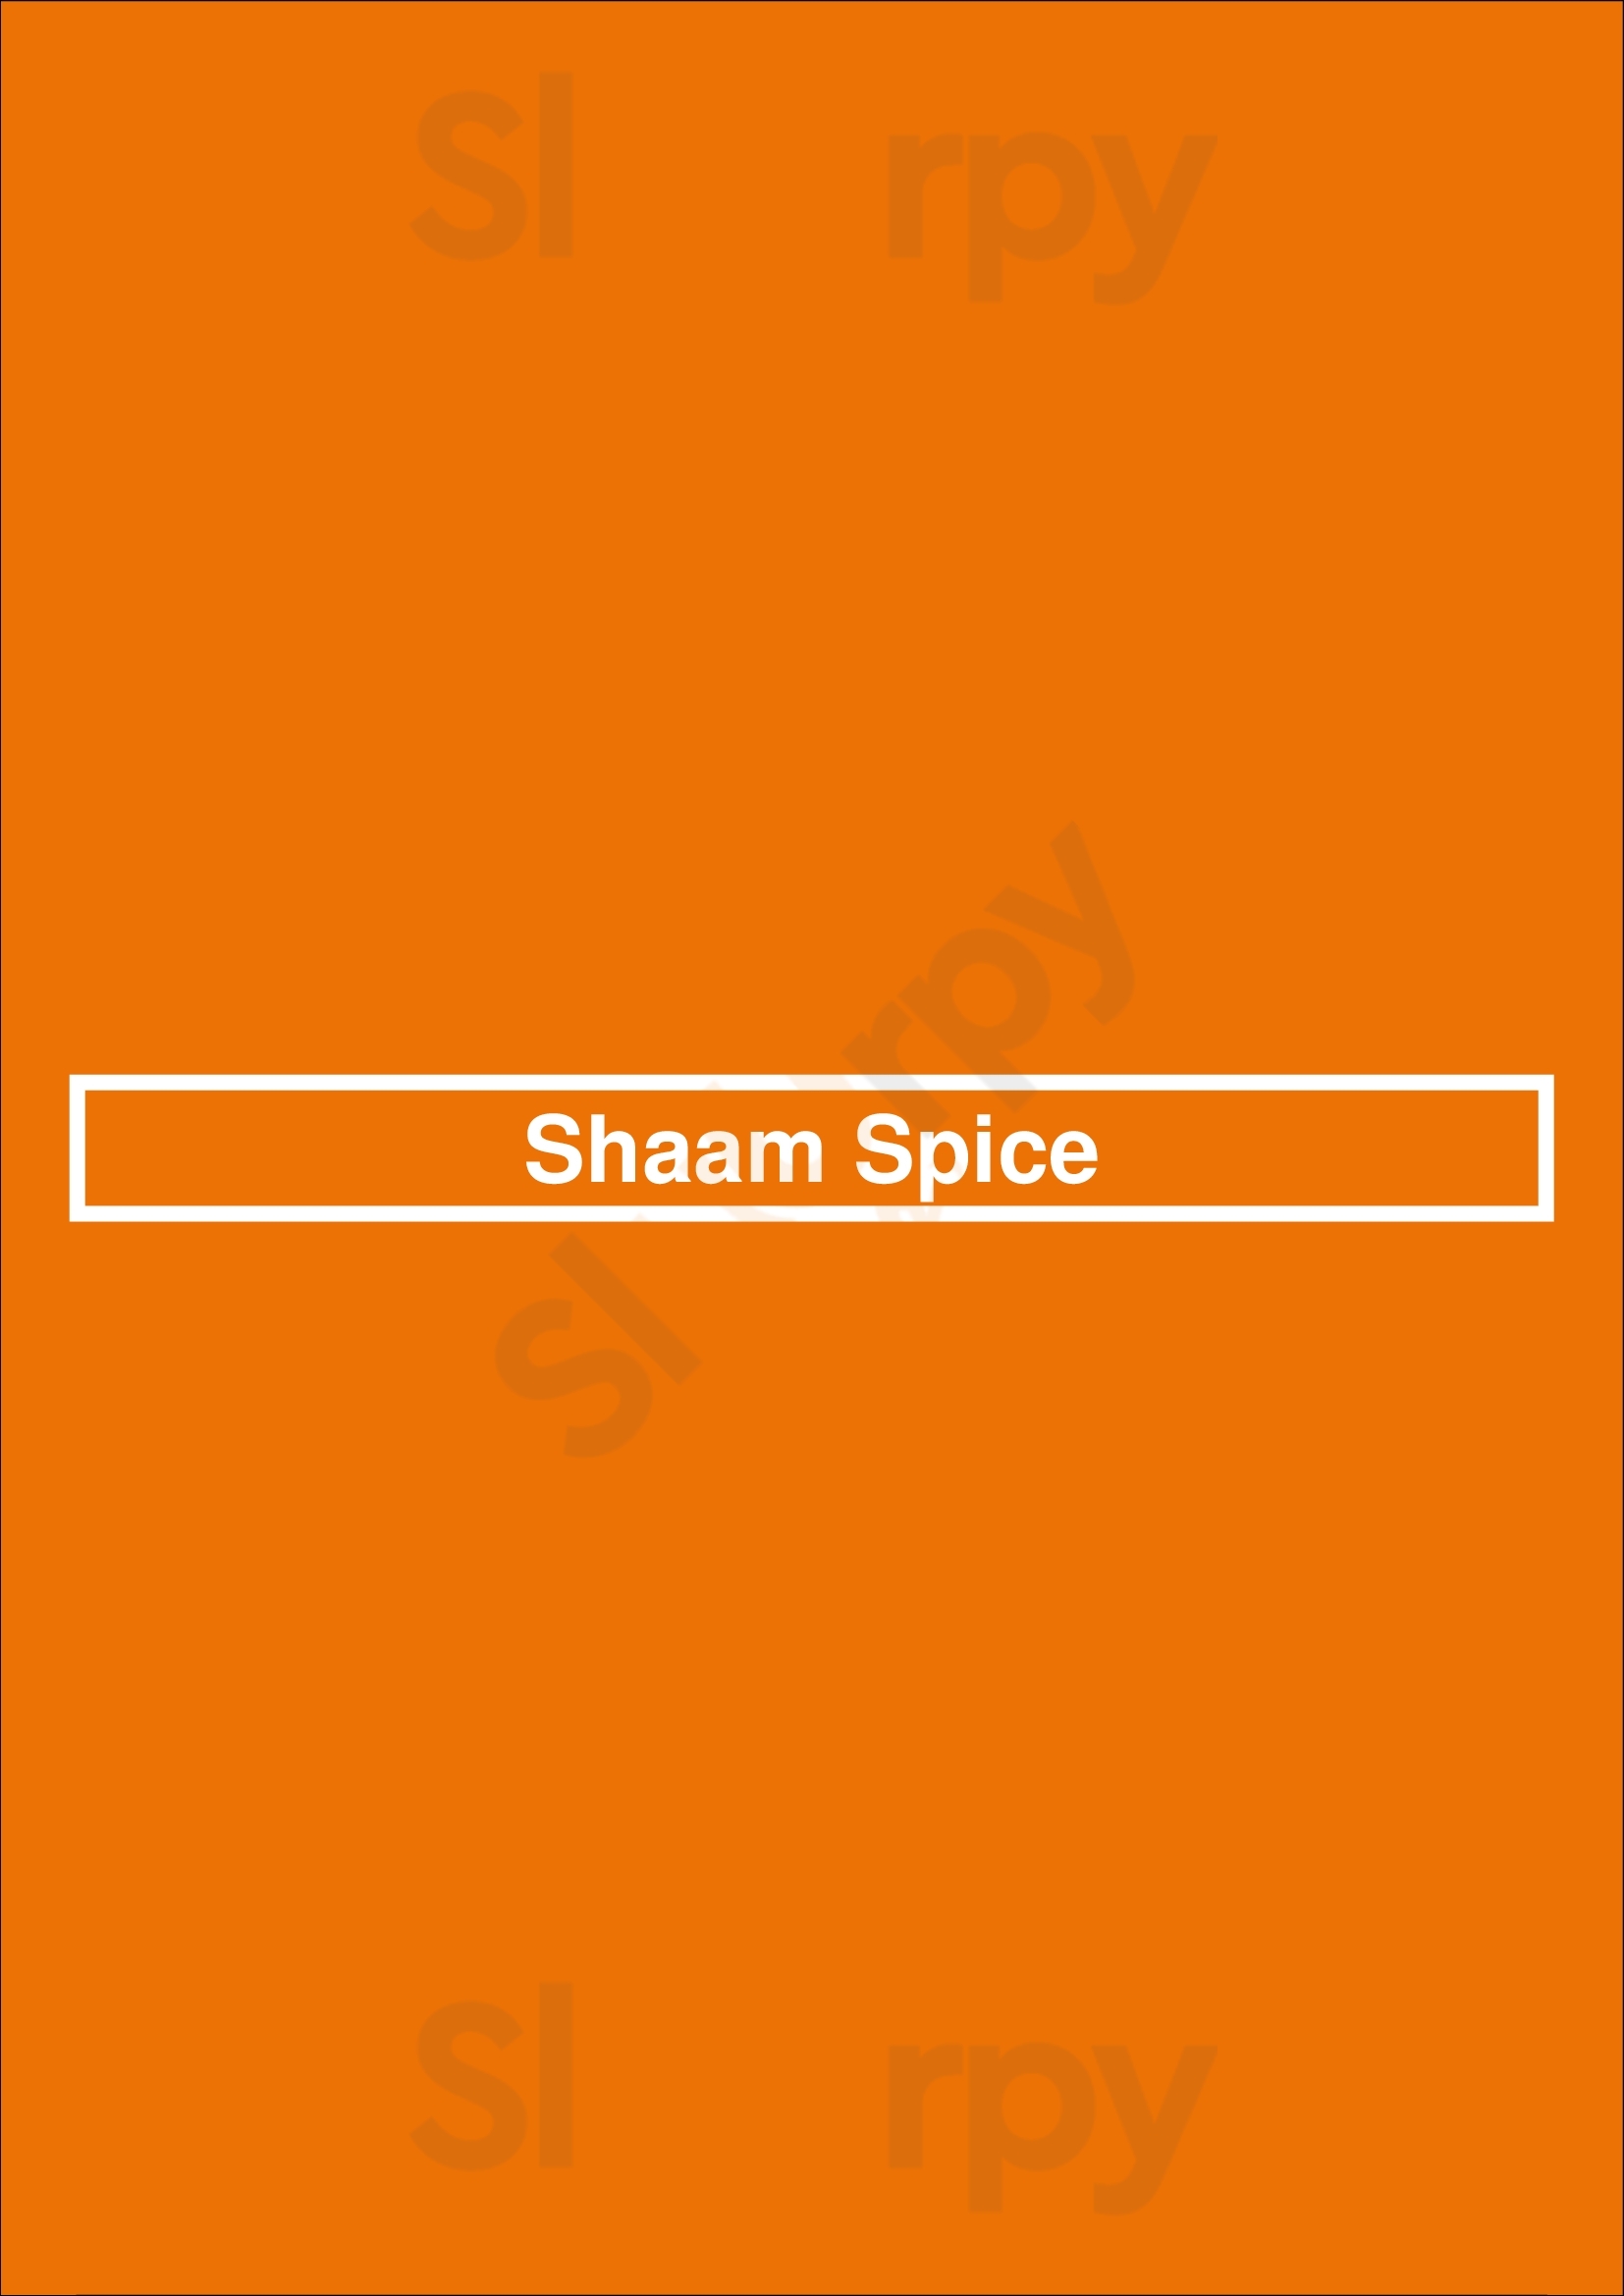 Shaam Spice Huddersfield Menu - 1